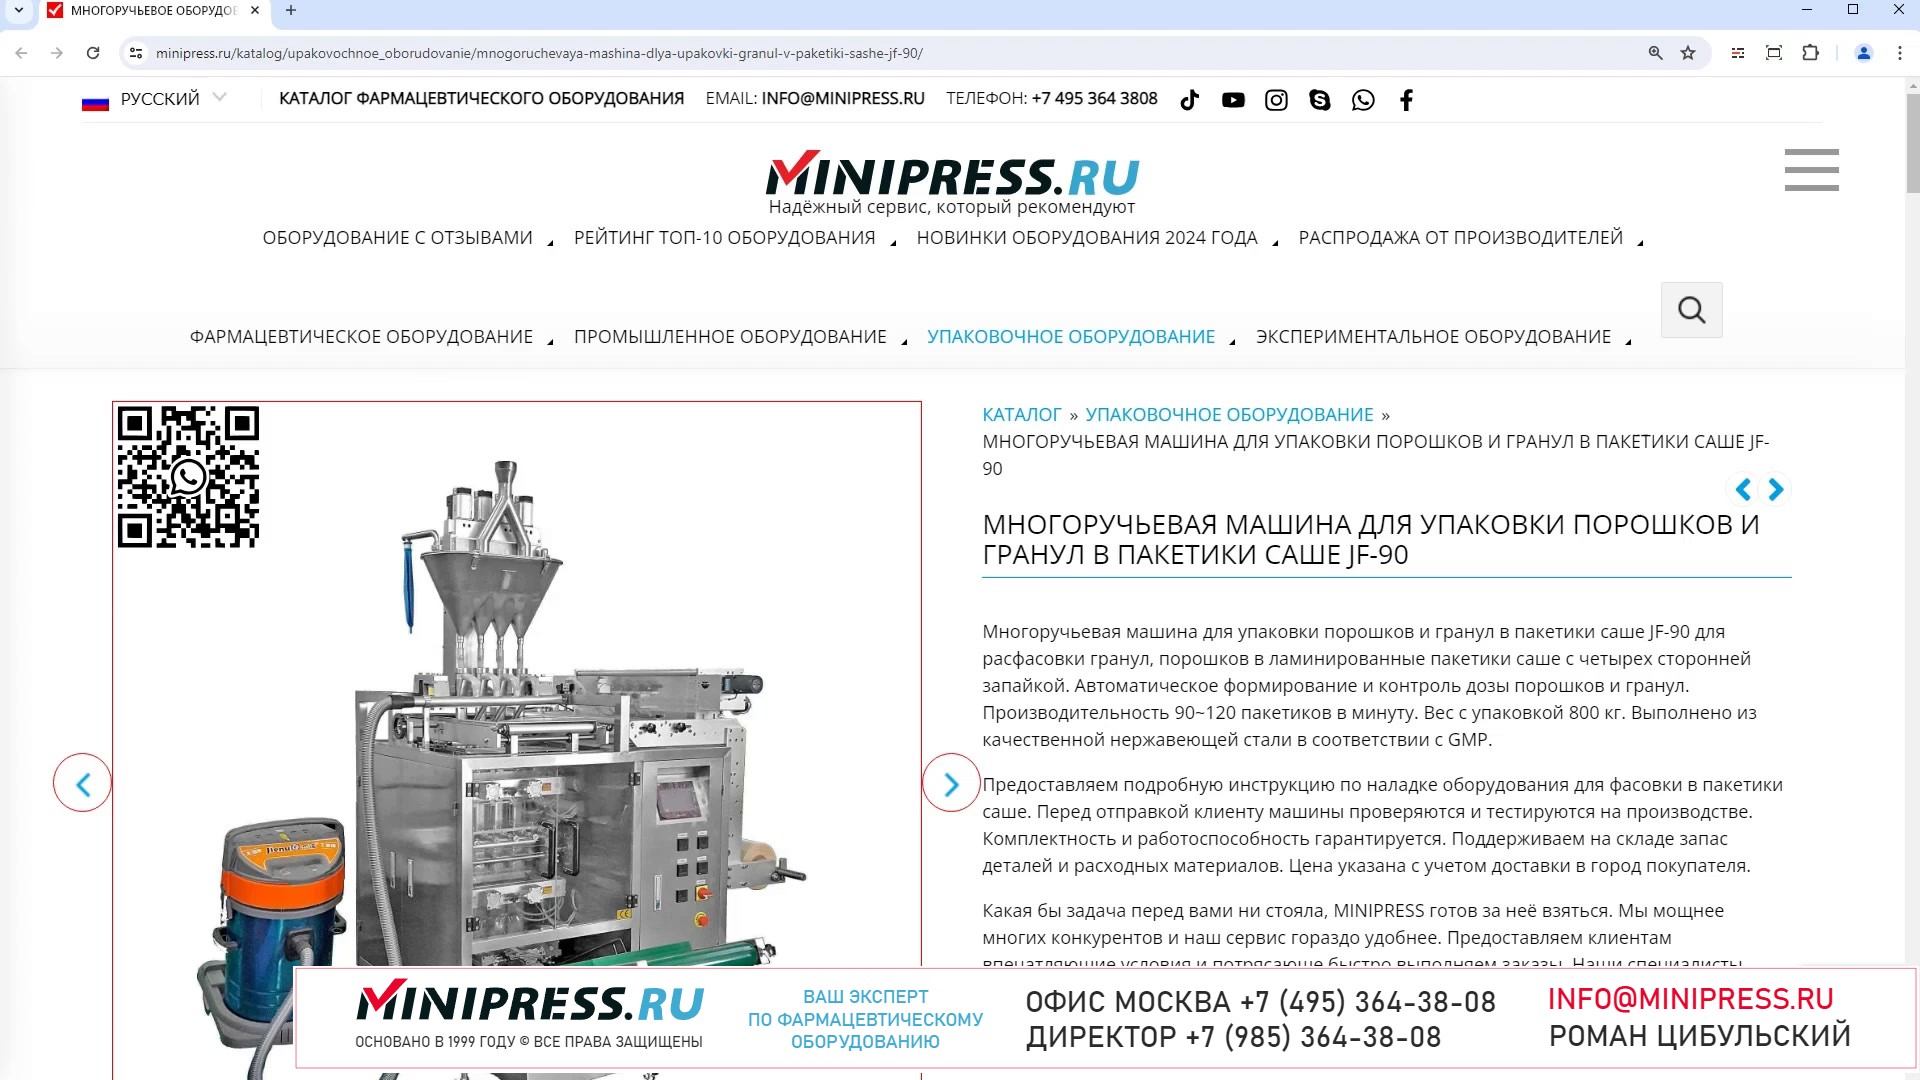 Minipress.ru Многоручьевая машина для упаковки порошков и гранул в пакетики саше JF-90